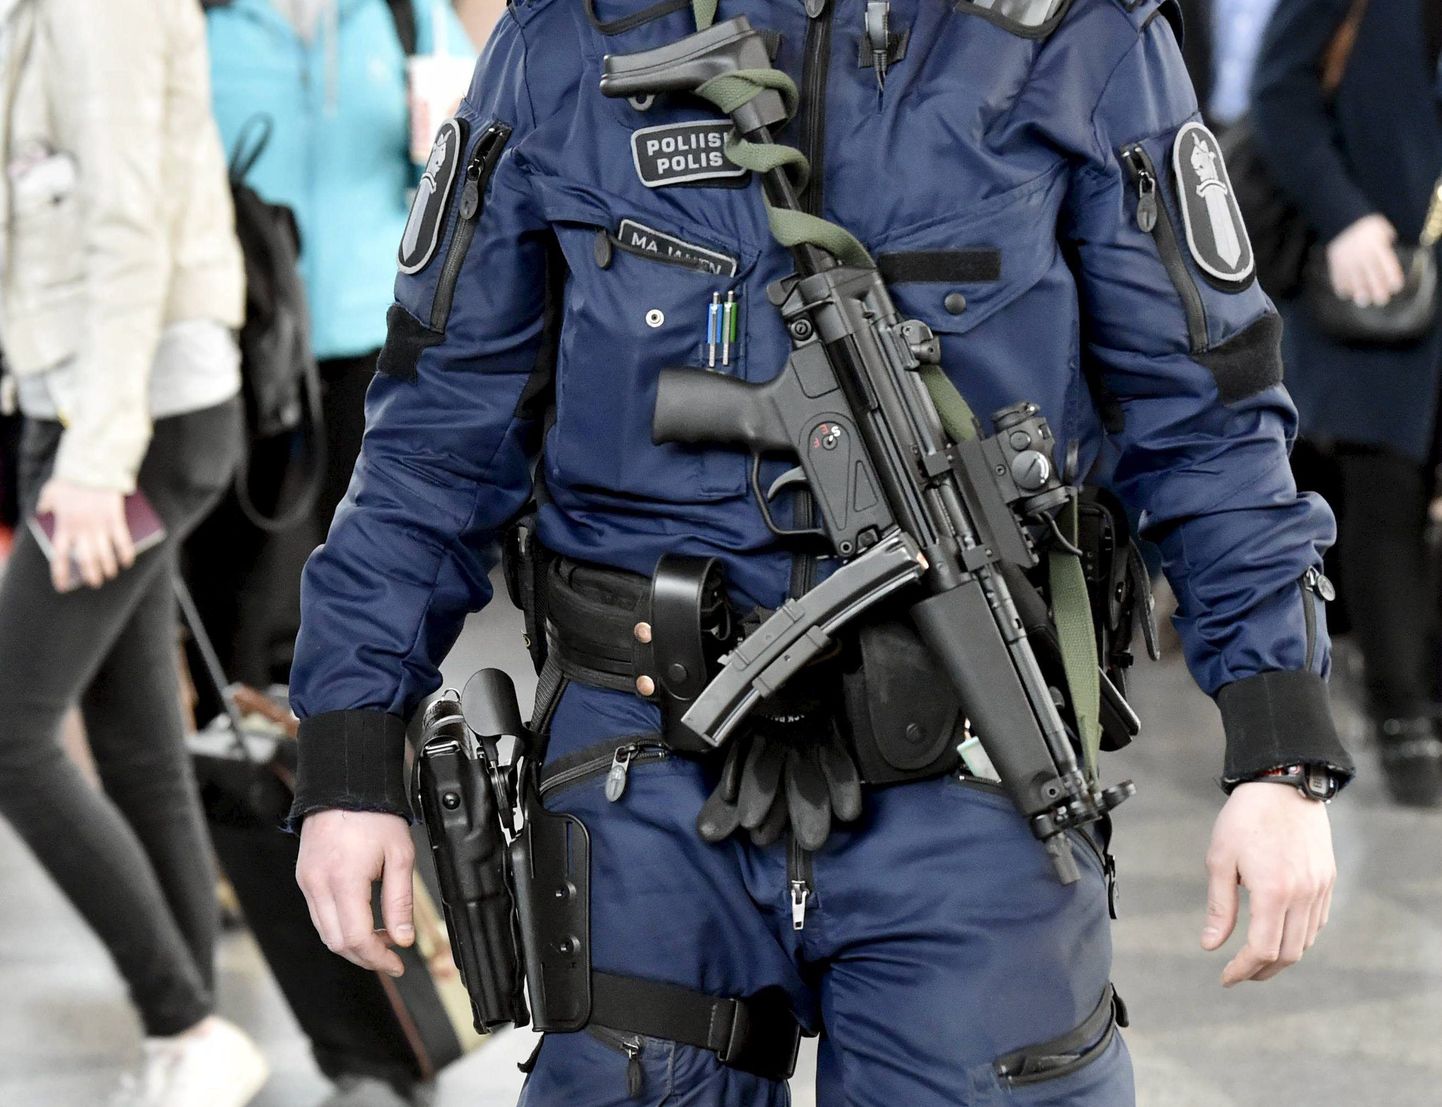 Soome politseinik MP5 püstolkuulipildujaga.